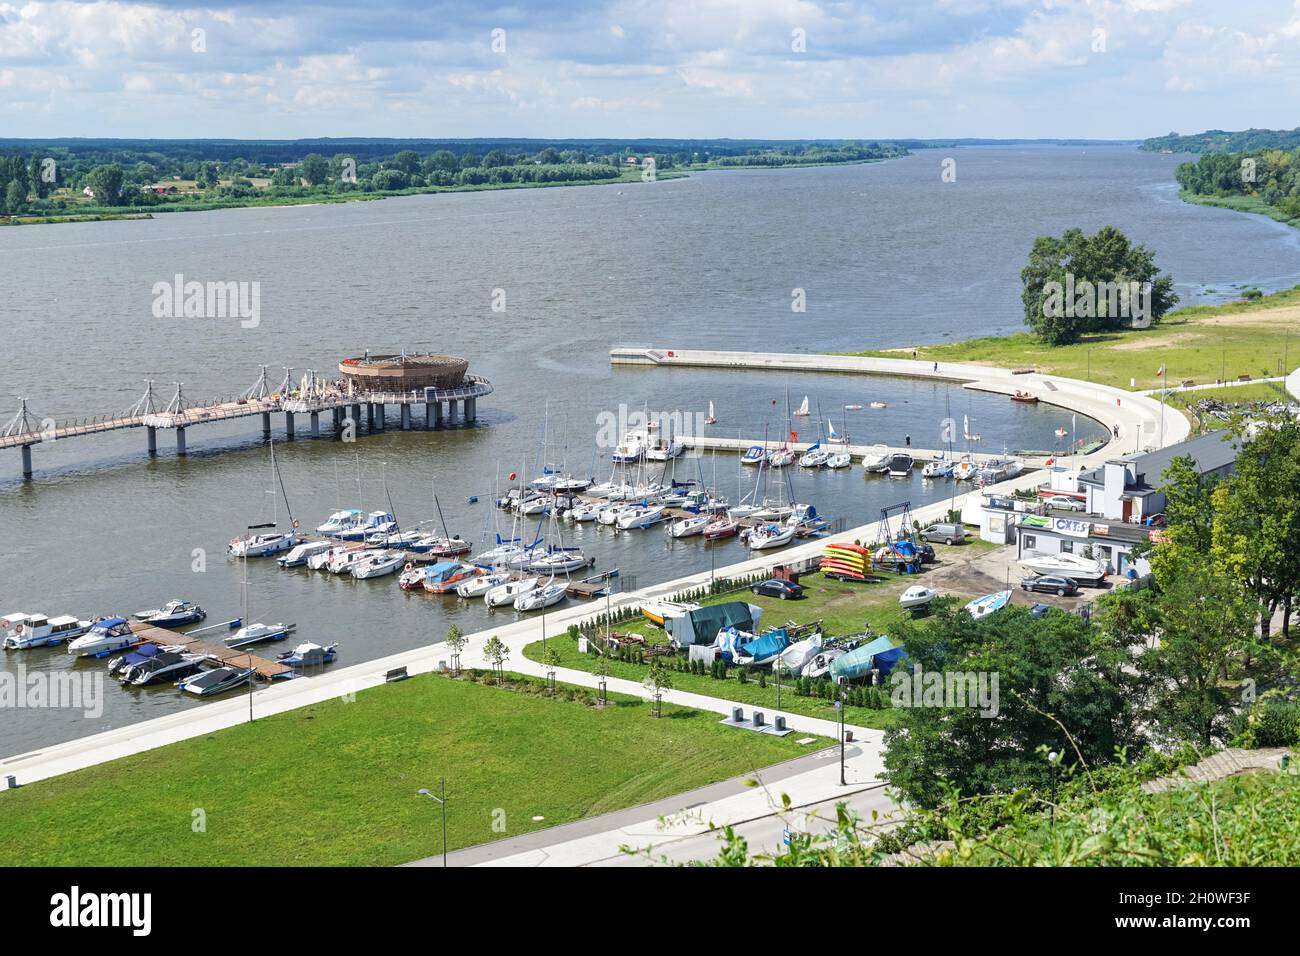 Pier and boats in marina on the Vistula River in Plock, Poland Stock Photo